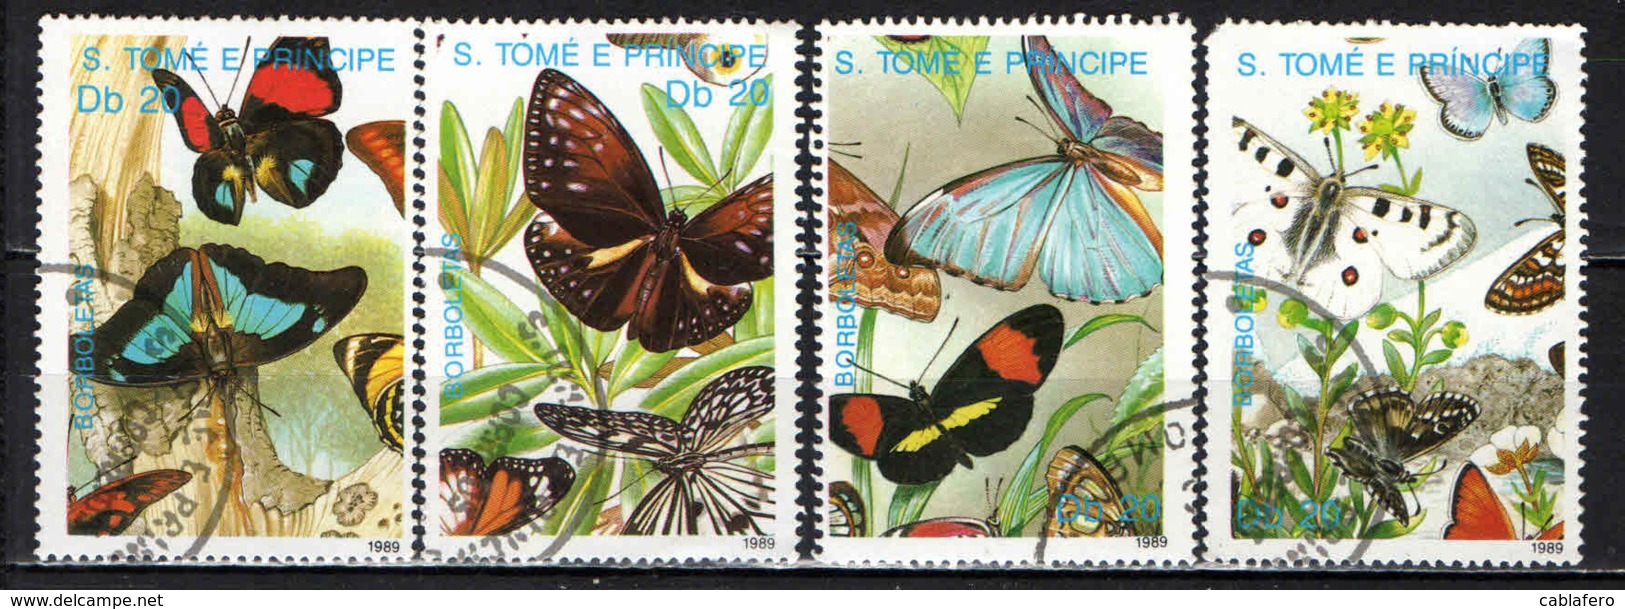 S. TOME' E PRINCIPE - 1989 - Butterflies - USATI - St. Thomas & Prince